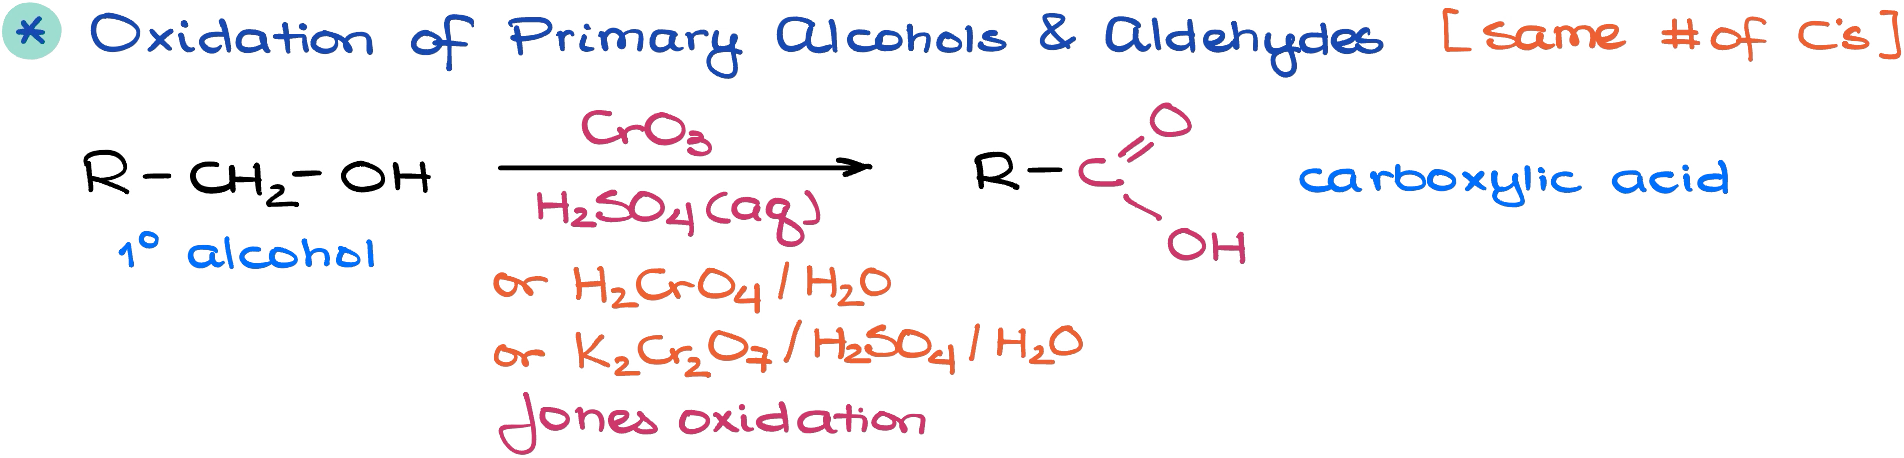 oxidation of primary alcohols